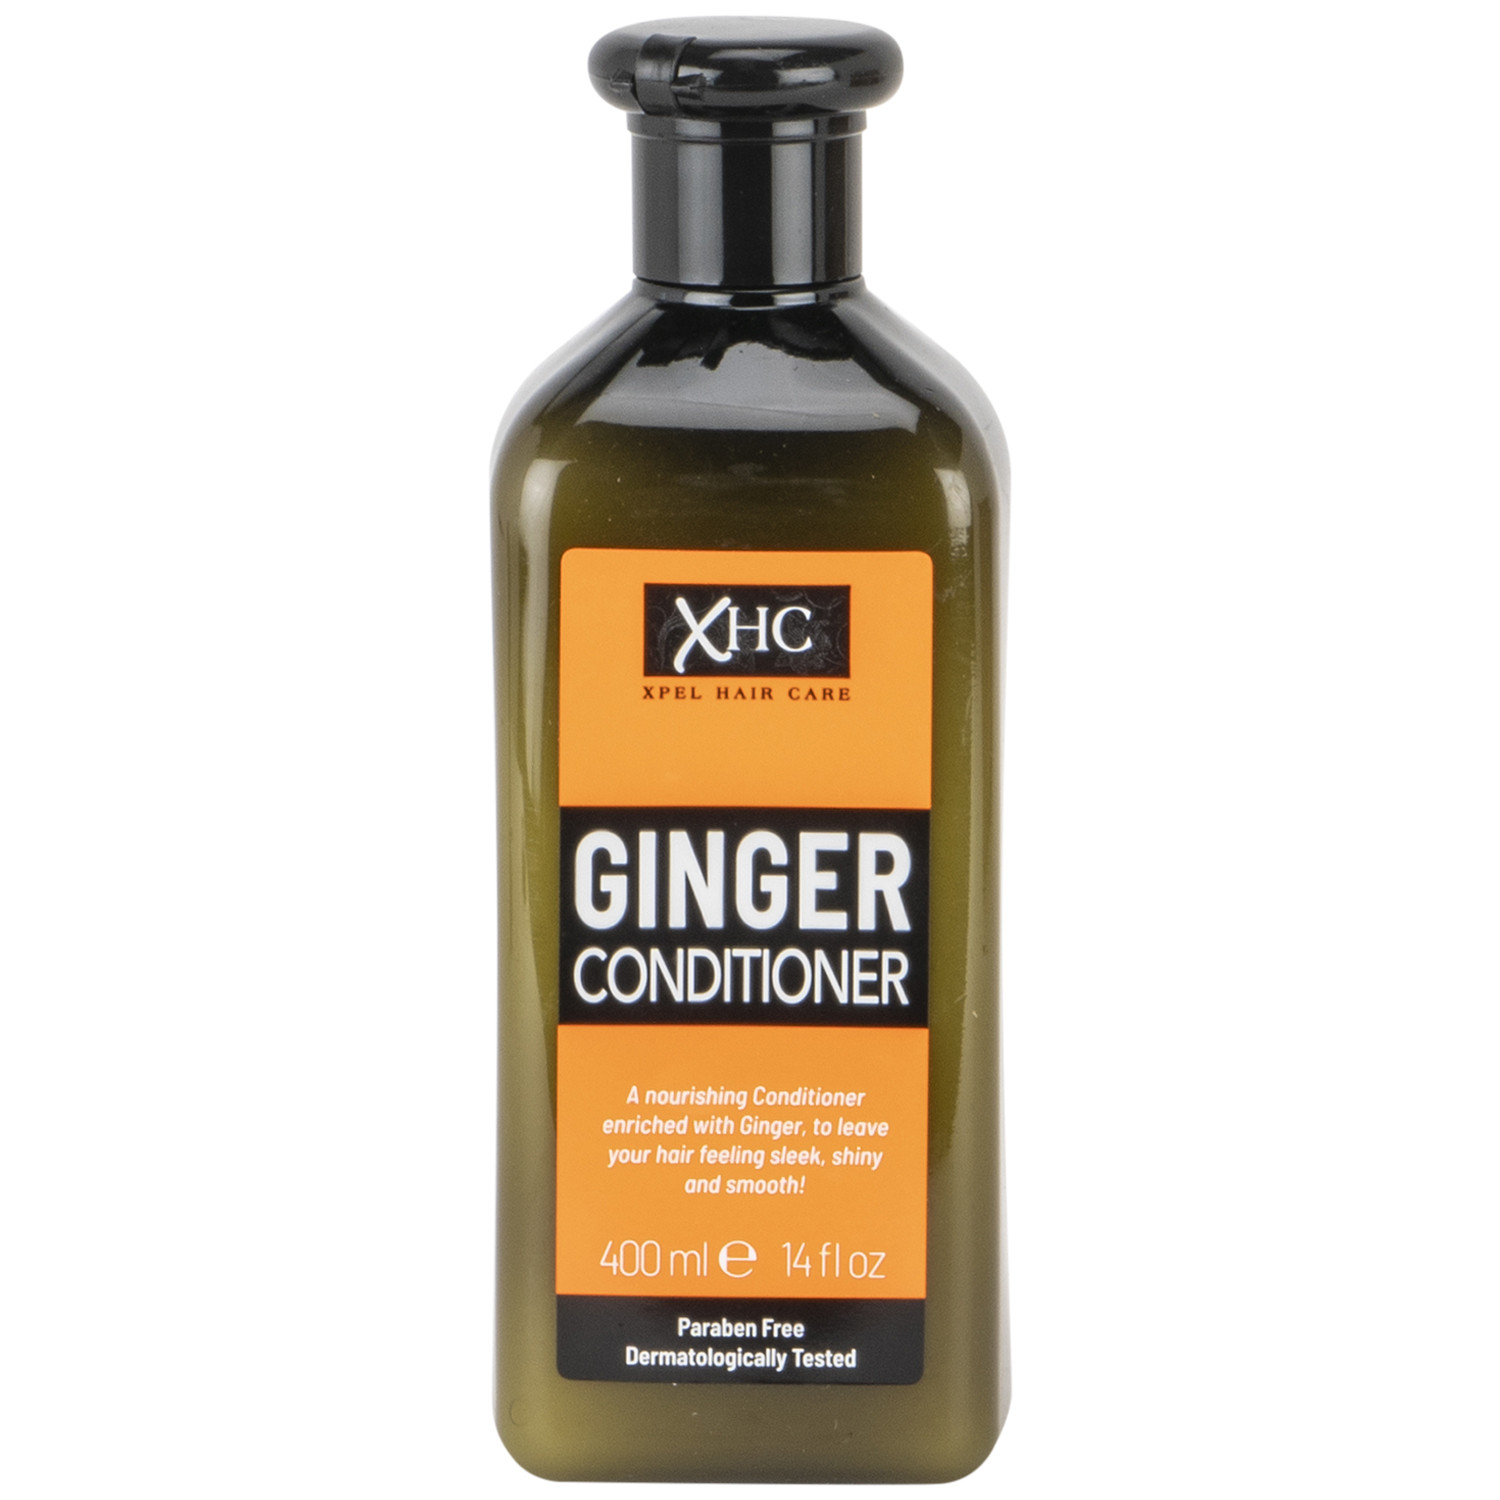 XHC Ginger Conditioner 400ml Image